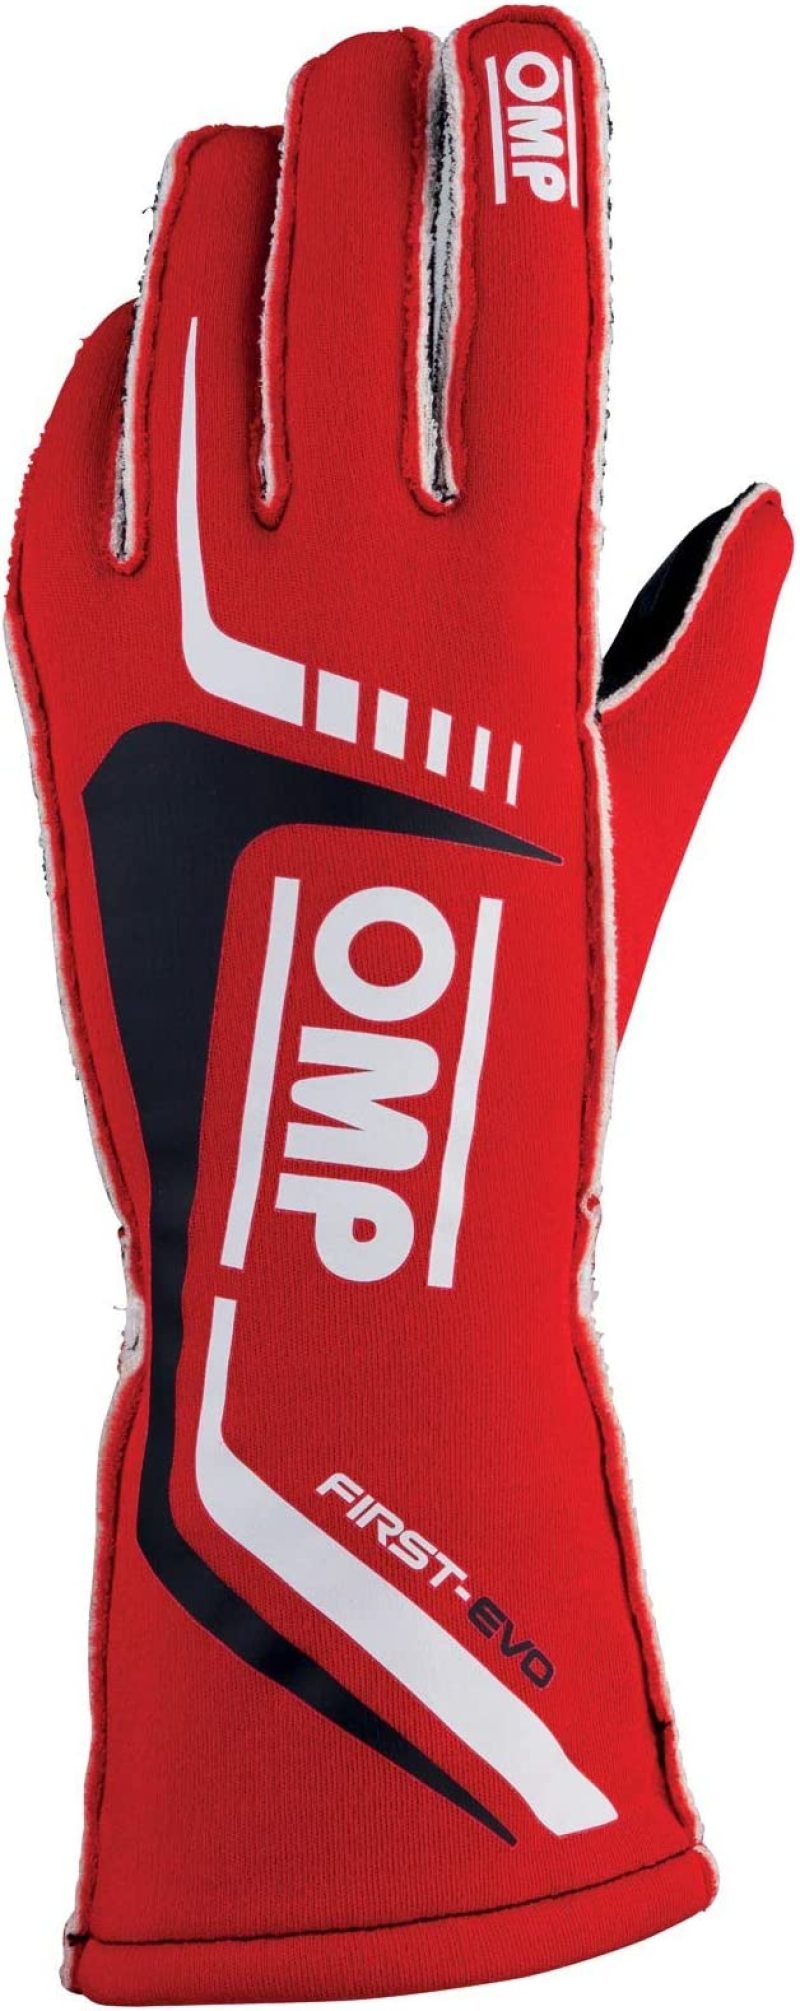 OMP First Evo Gloves Red - Size M (Fia 8856-2018) - IB0-0767-A01-061-M